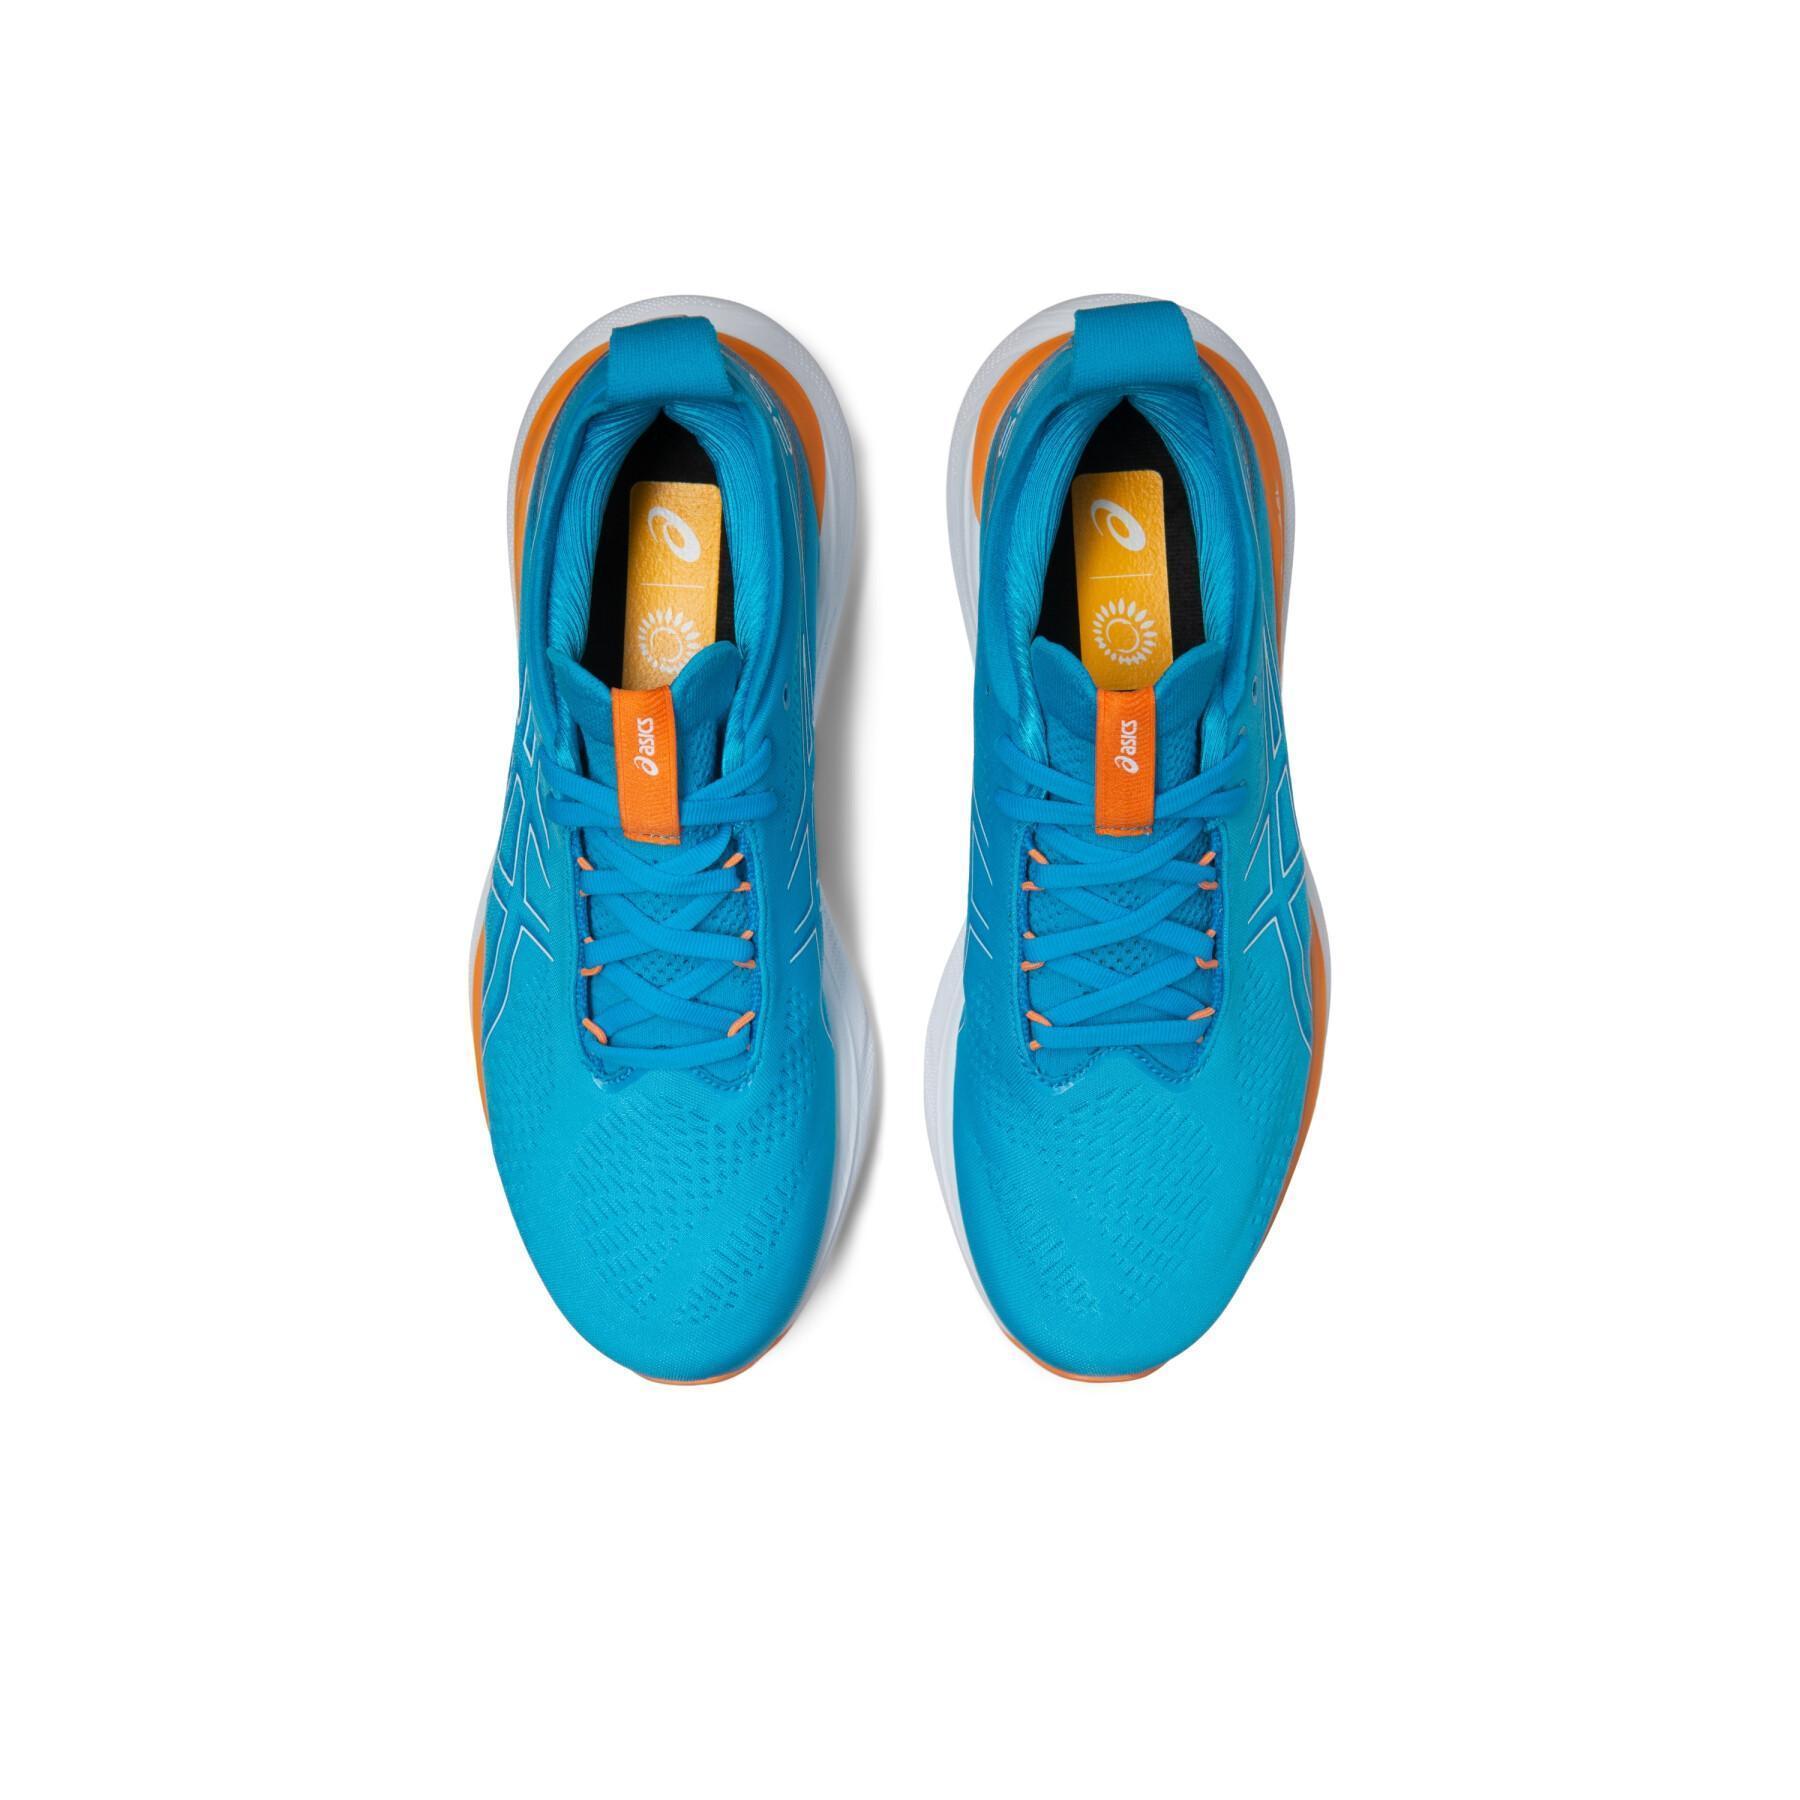 Shoes from running Asics Gel-Nimbus 25